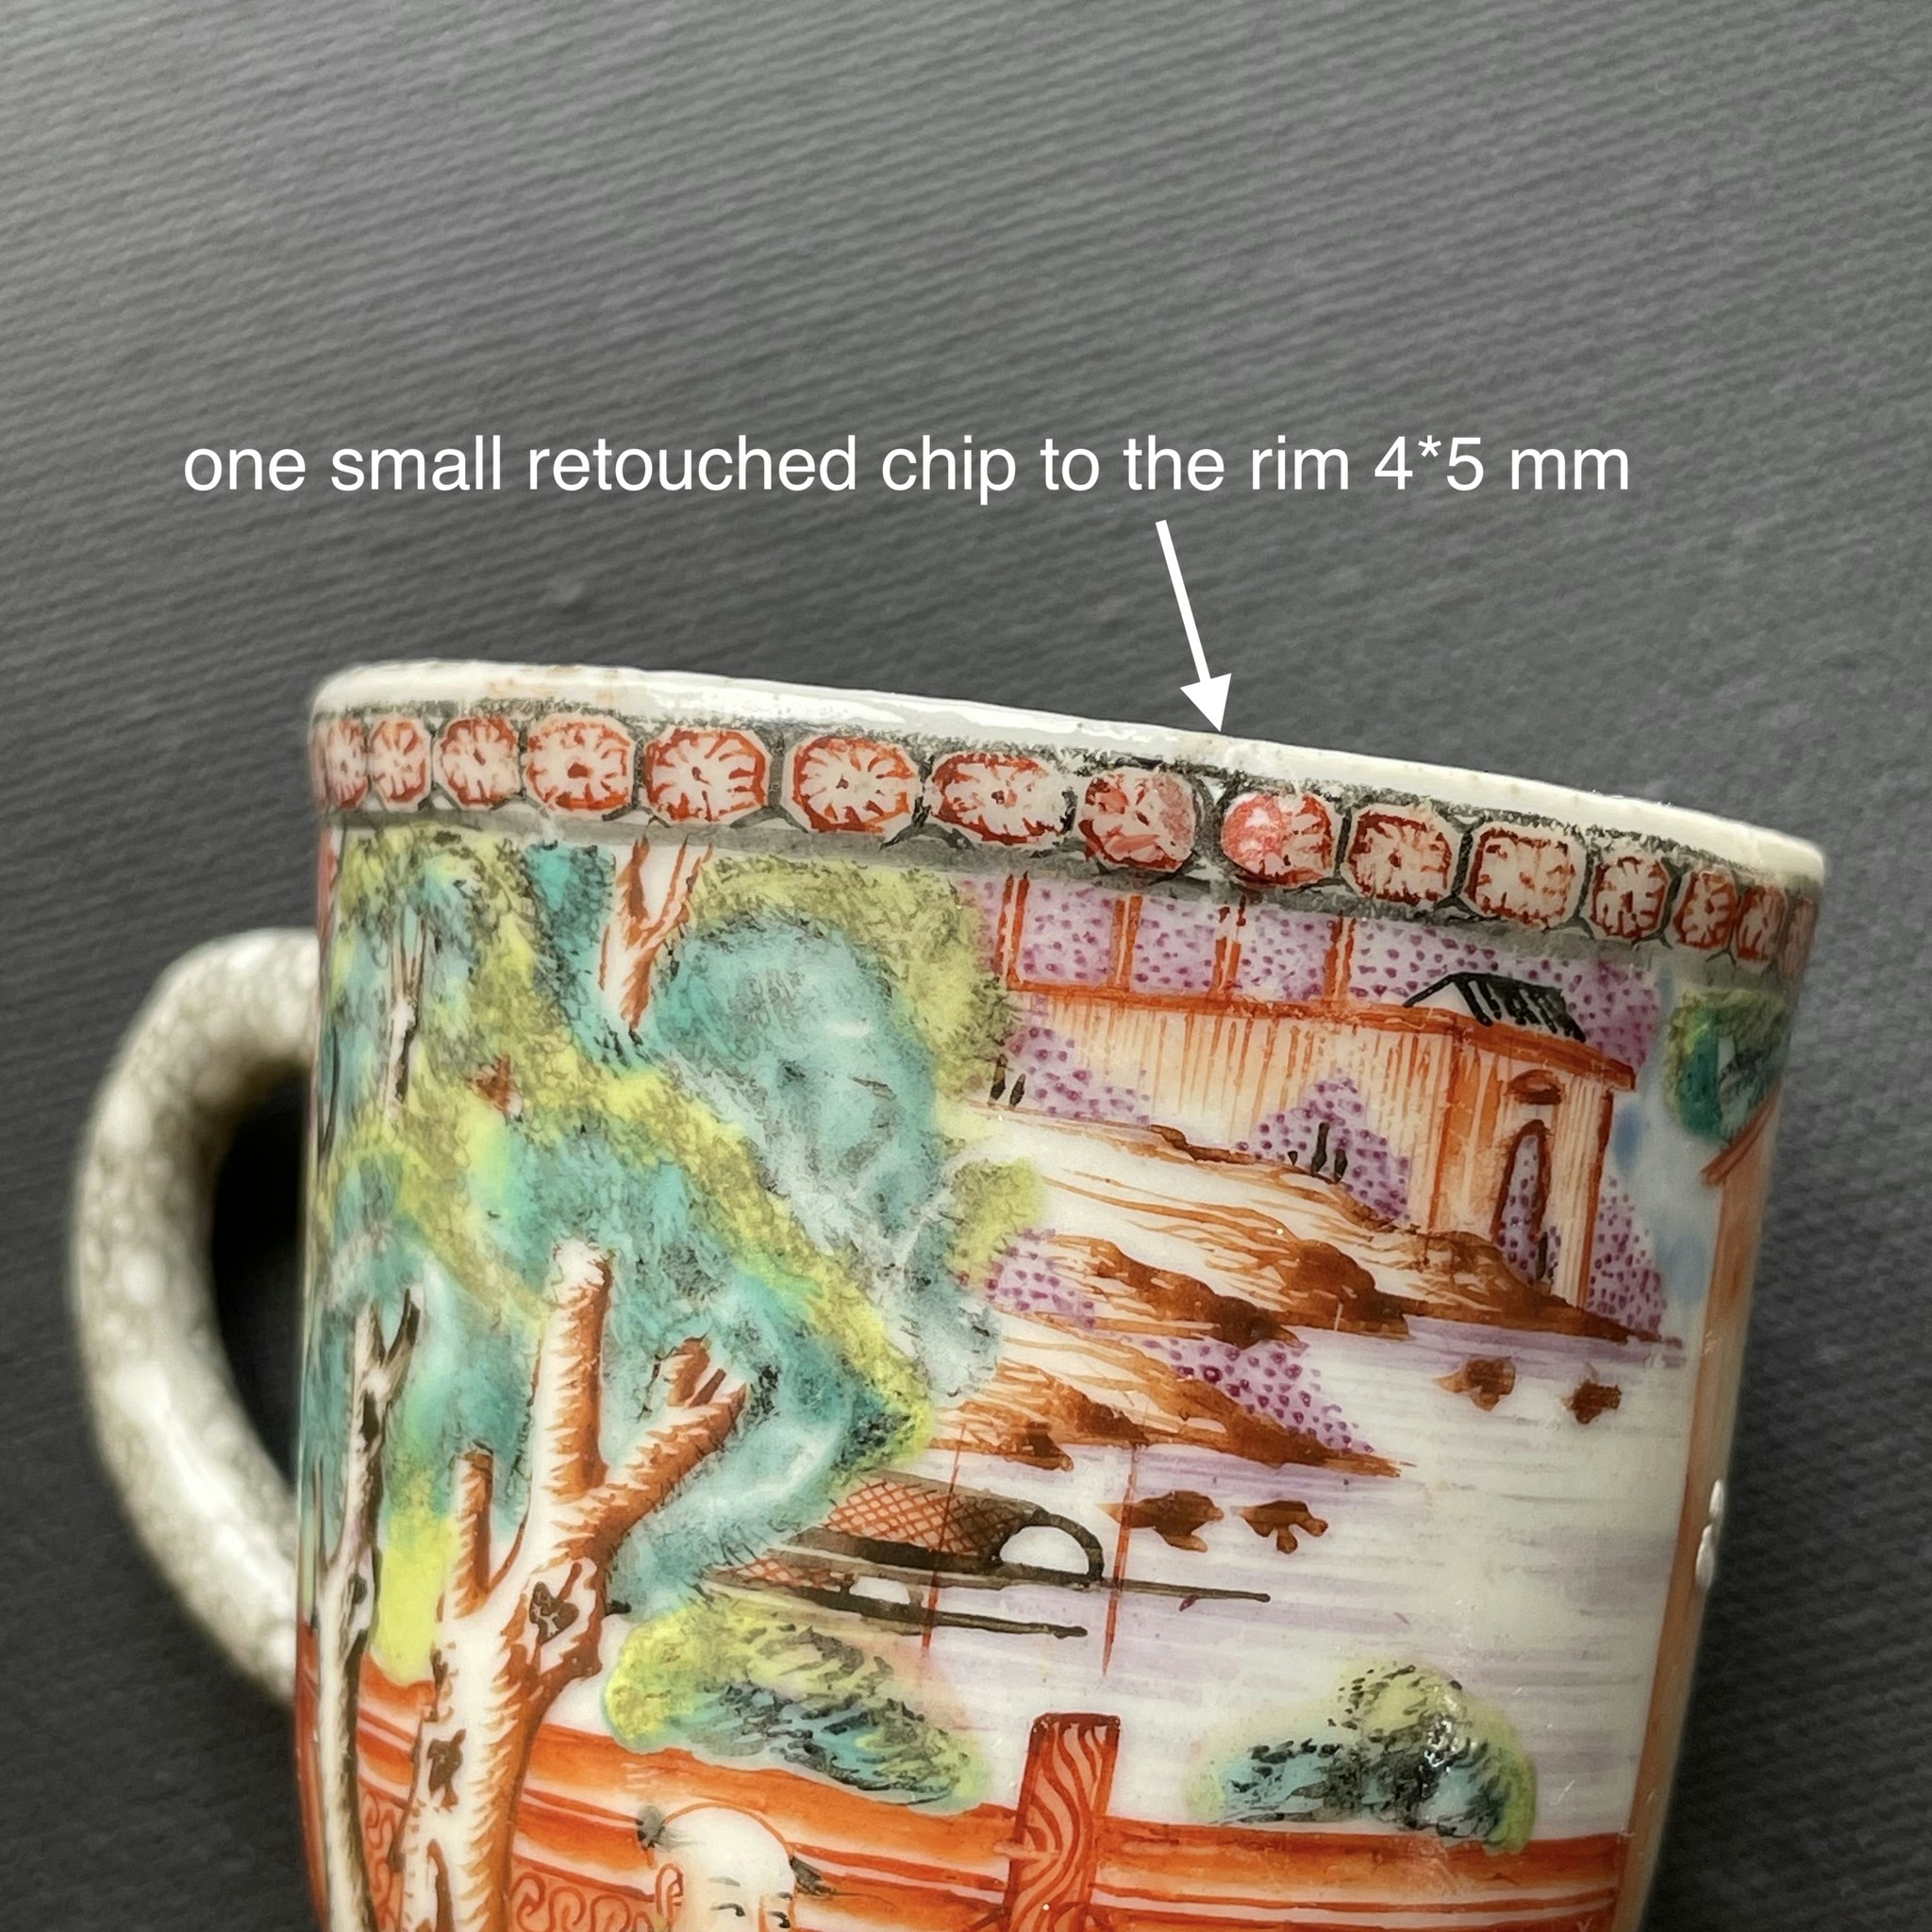 Antique Chinese Rose Mandarin Porcelain teacup Qianlong period #1102